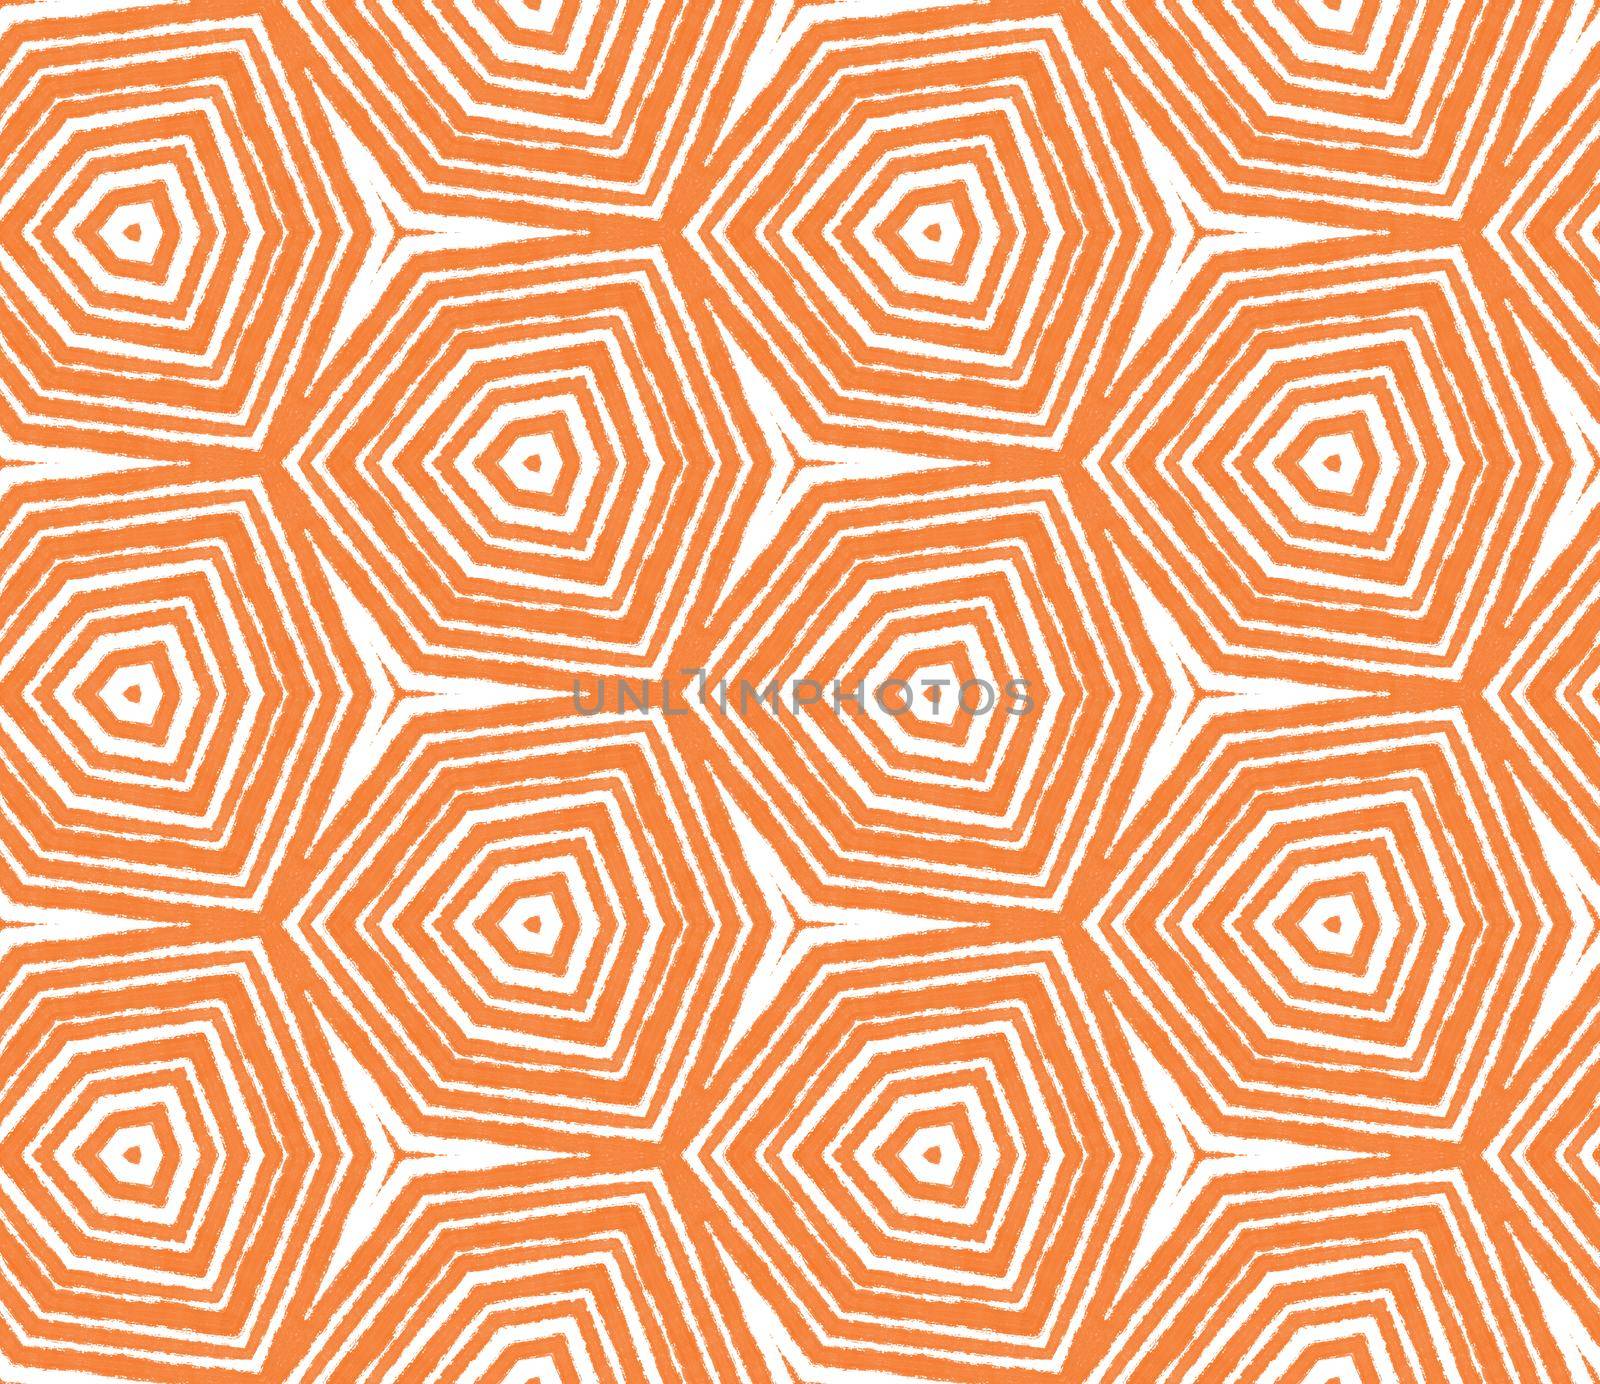 Striped hand drawn pattern. Orange symmetrical kaleidoscope background. Repeating striped hand drawn tile. Textile ready majestic print, swimwear fabric, wallpaper, wrapping.